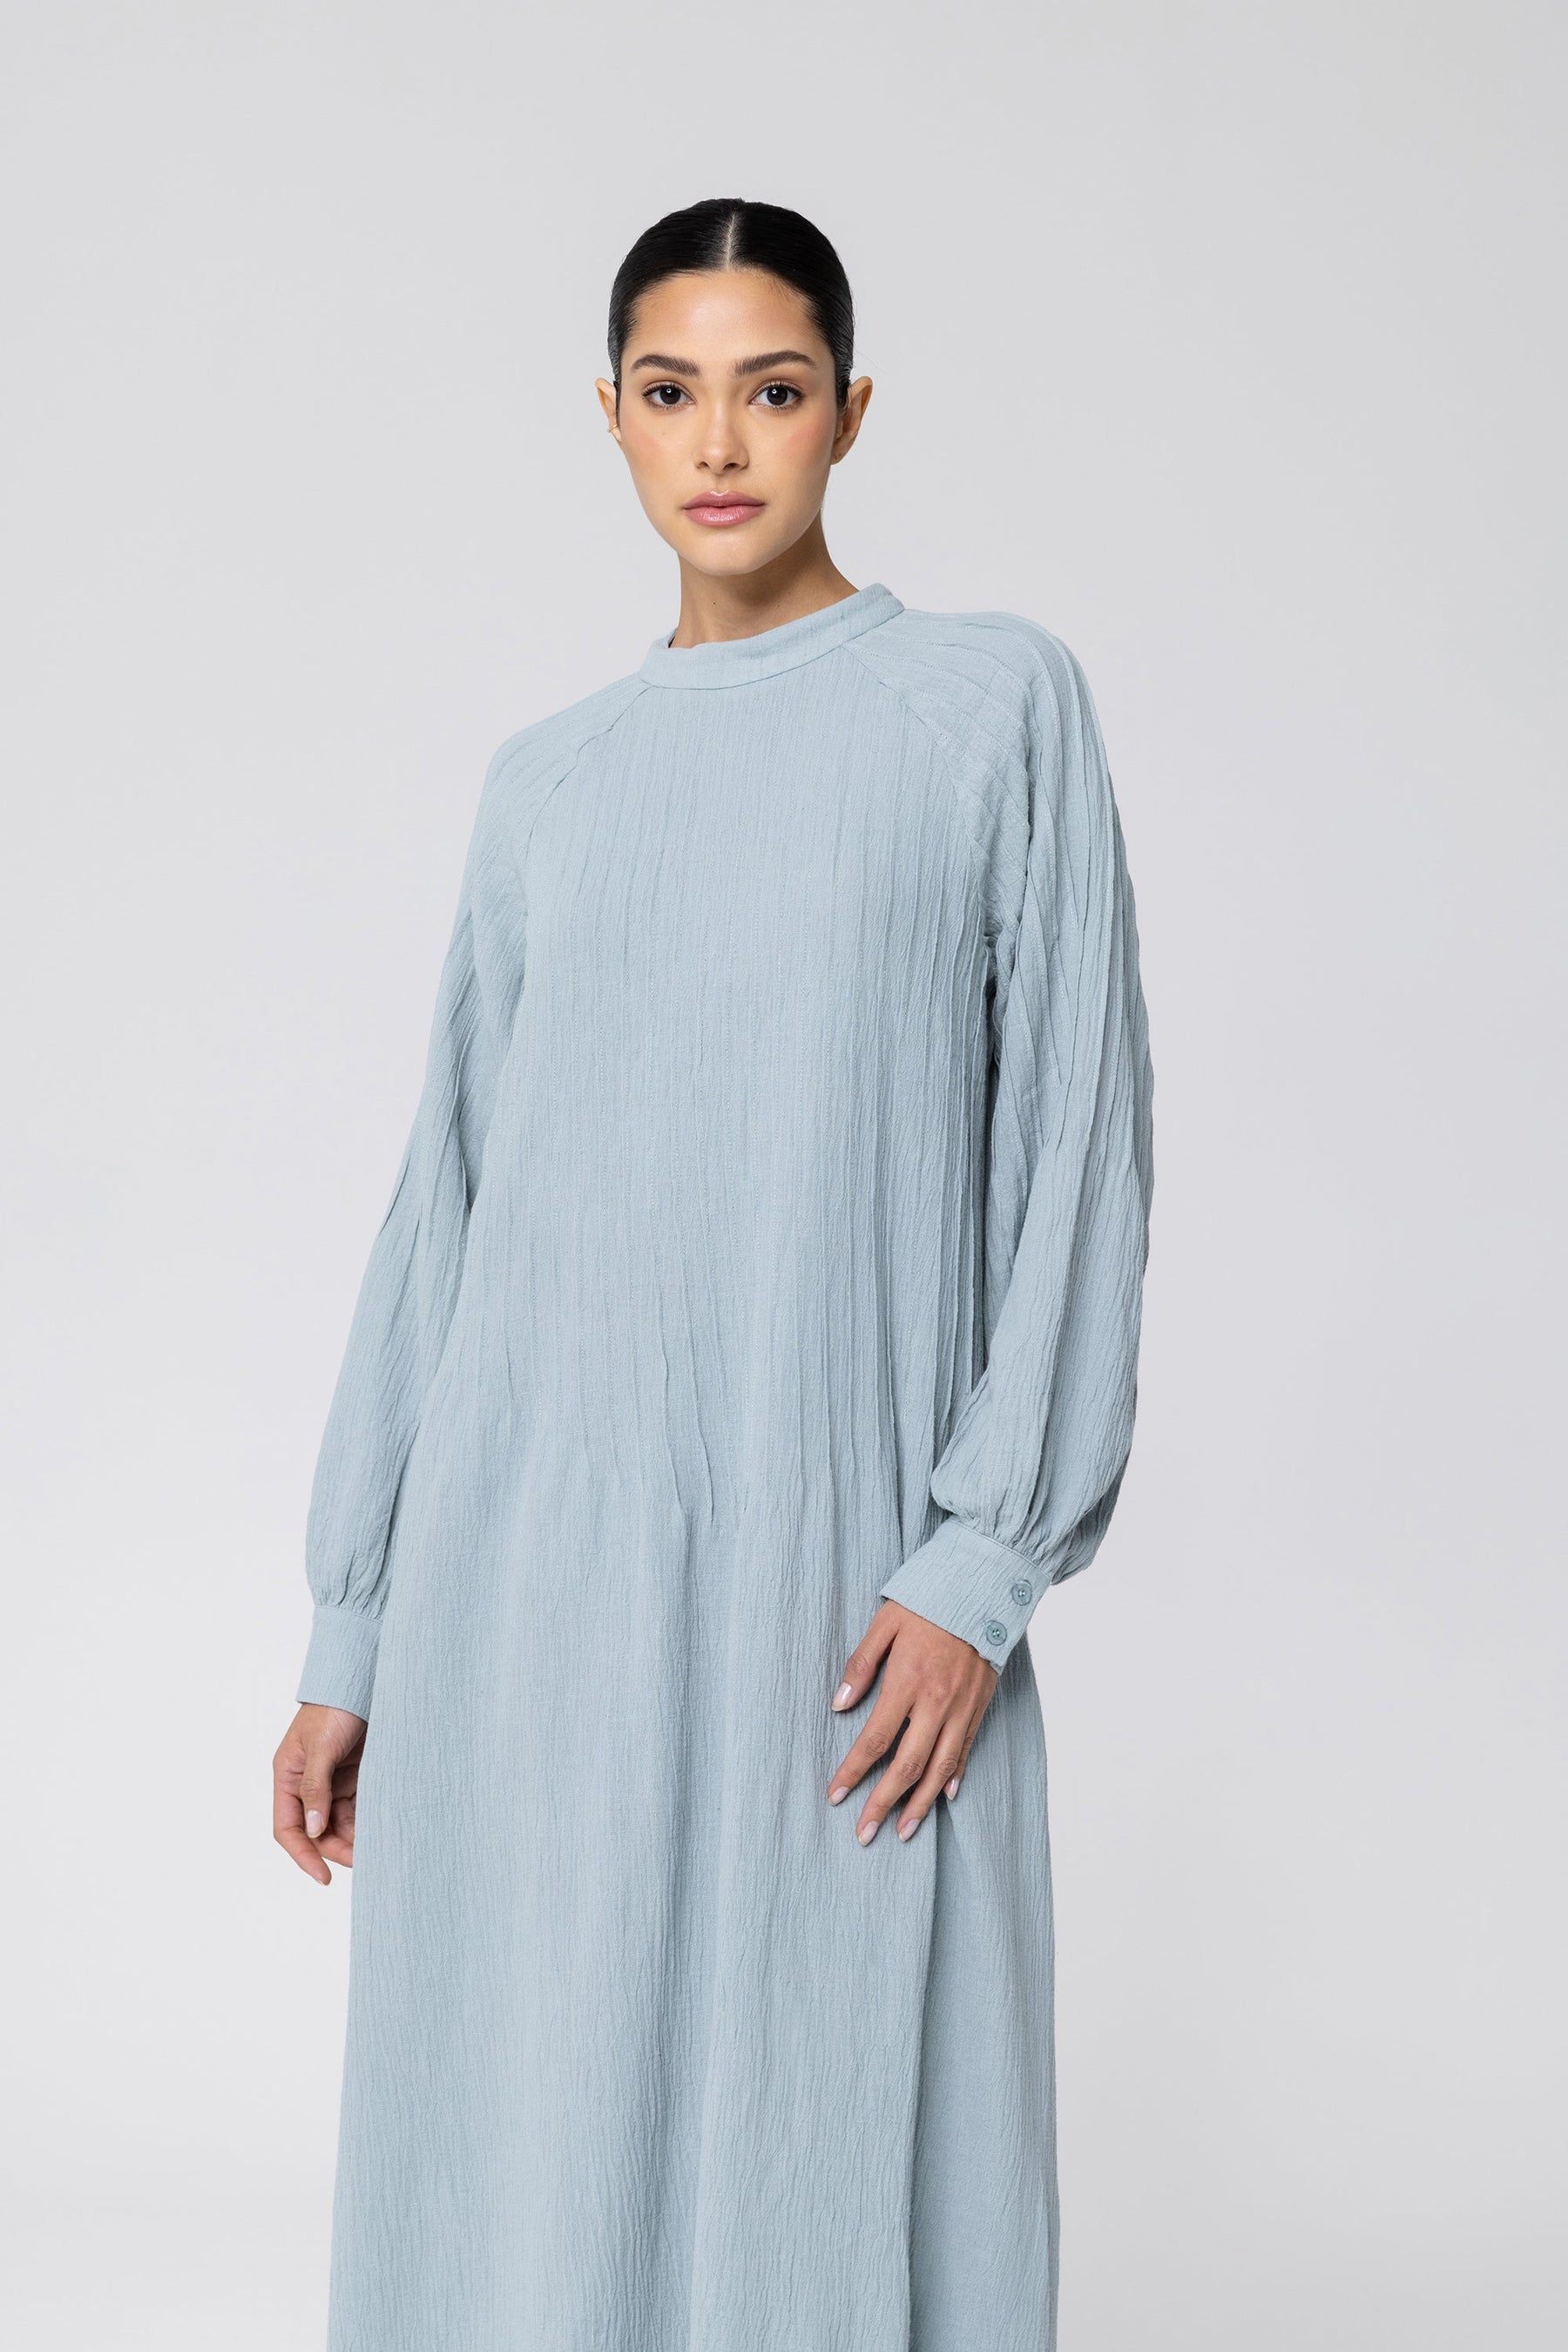 Hanifa Balloon Sleeve Maxi Dress - Stillwater Veiled Collection 